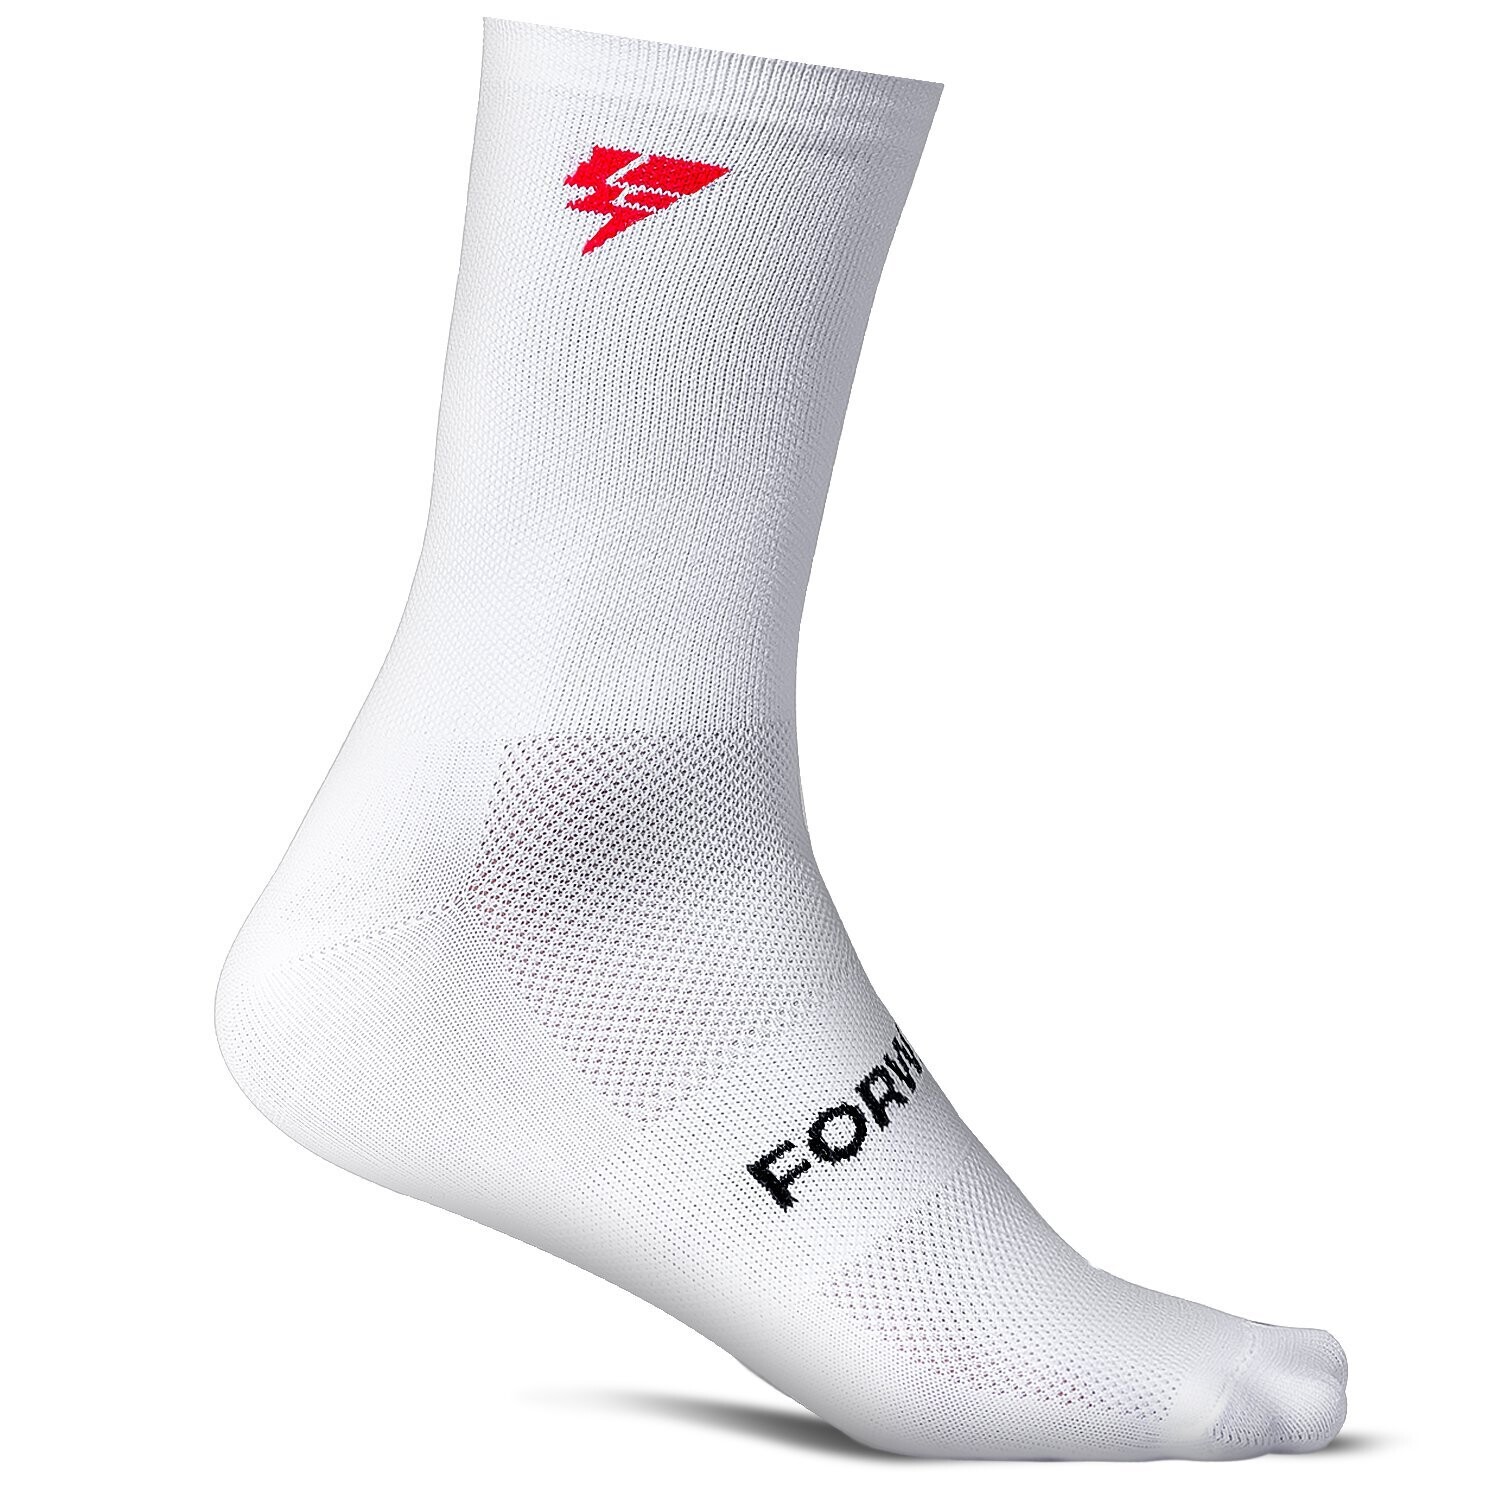 Forward Lightning (Top Logo) Cycling Socks